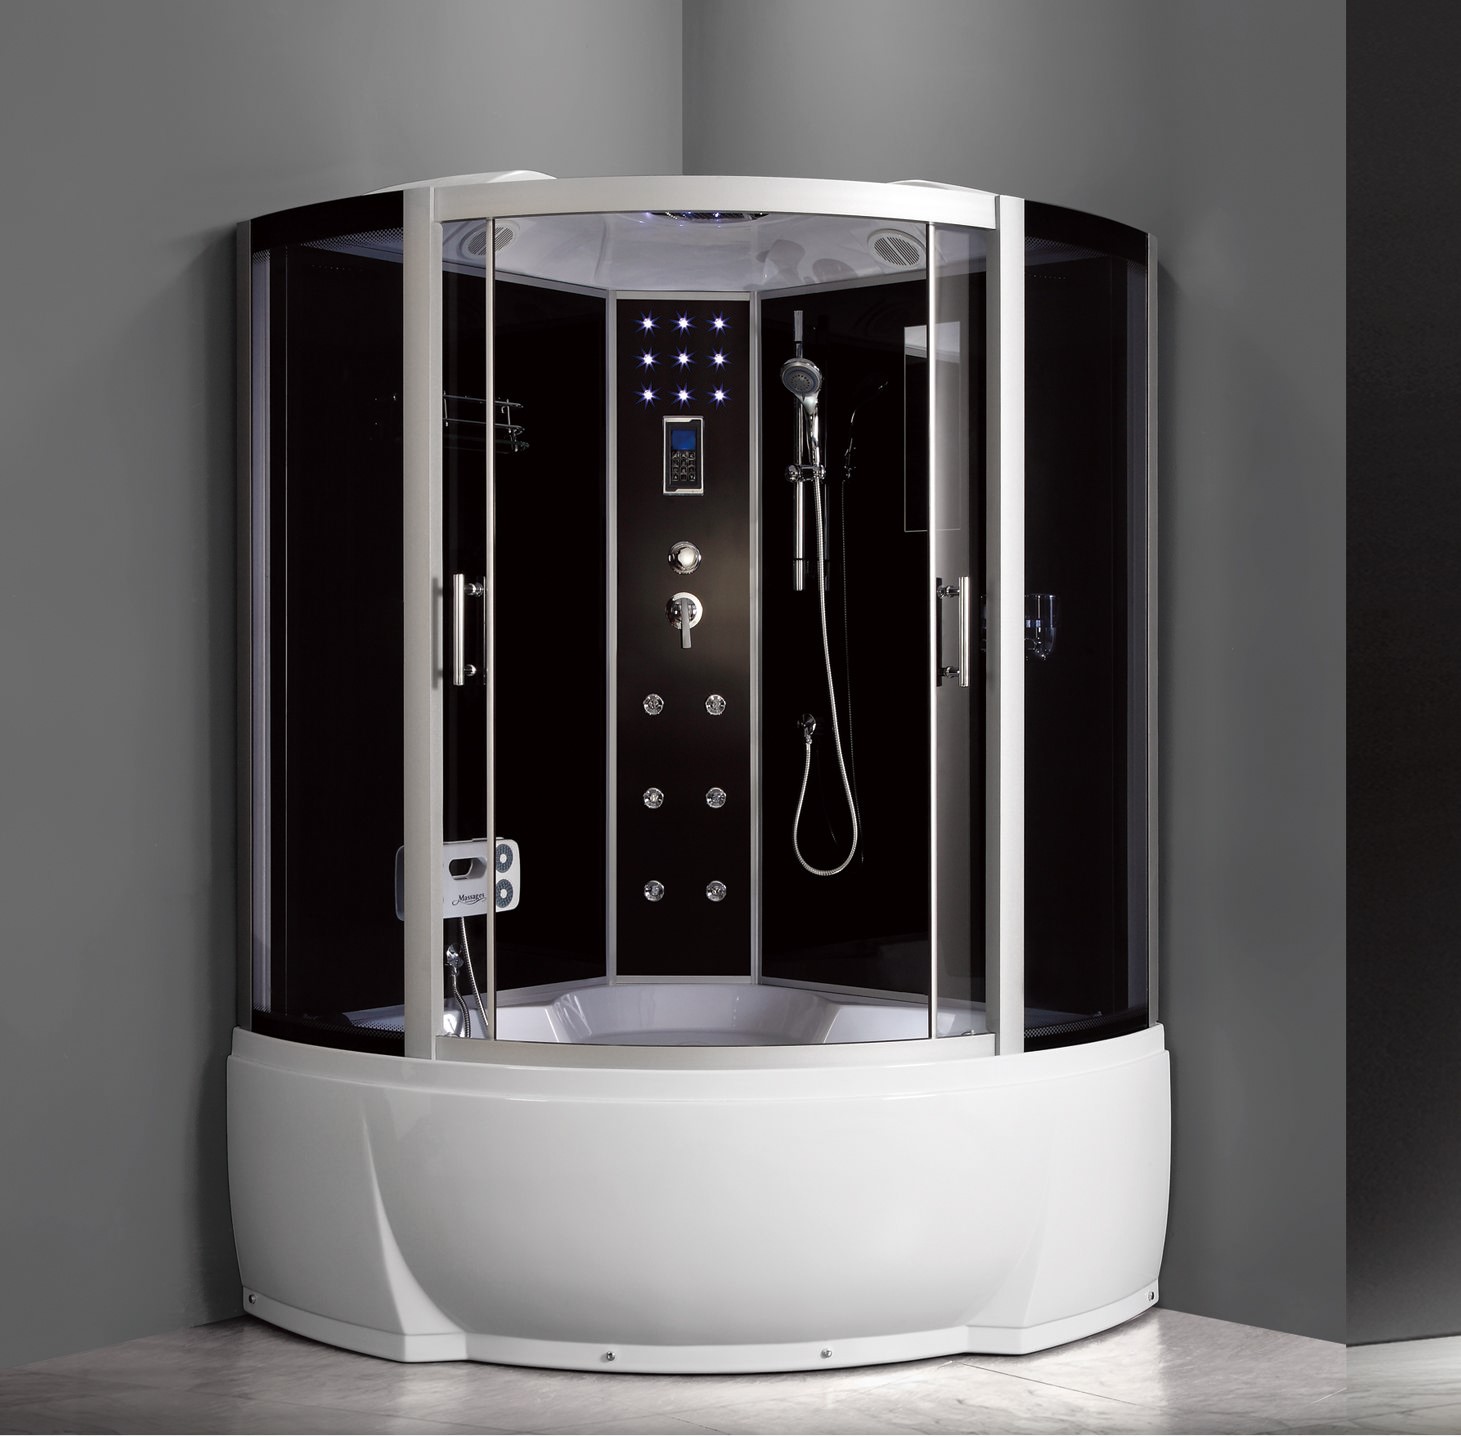 AKL-1352-Bathroom Designs Glass Shower Enclosures With Whirlpool Tub_??.jpg